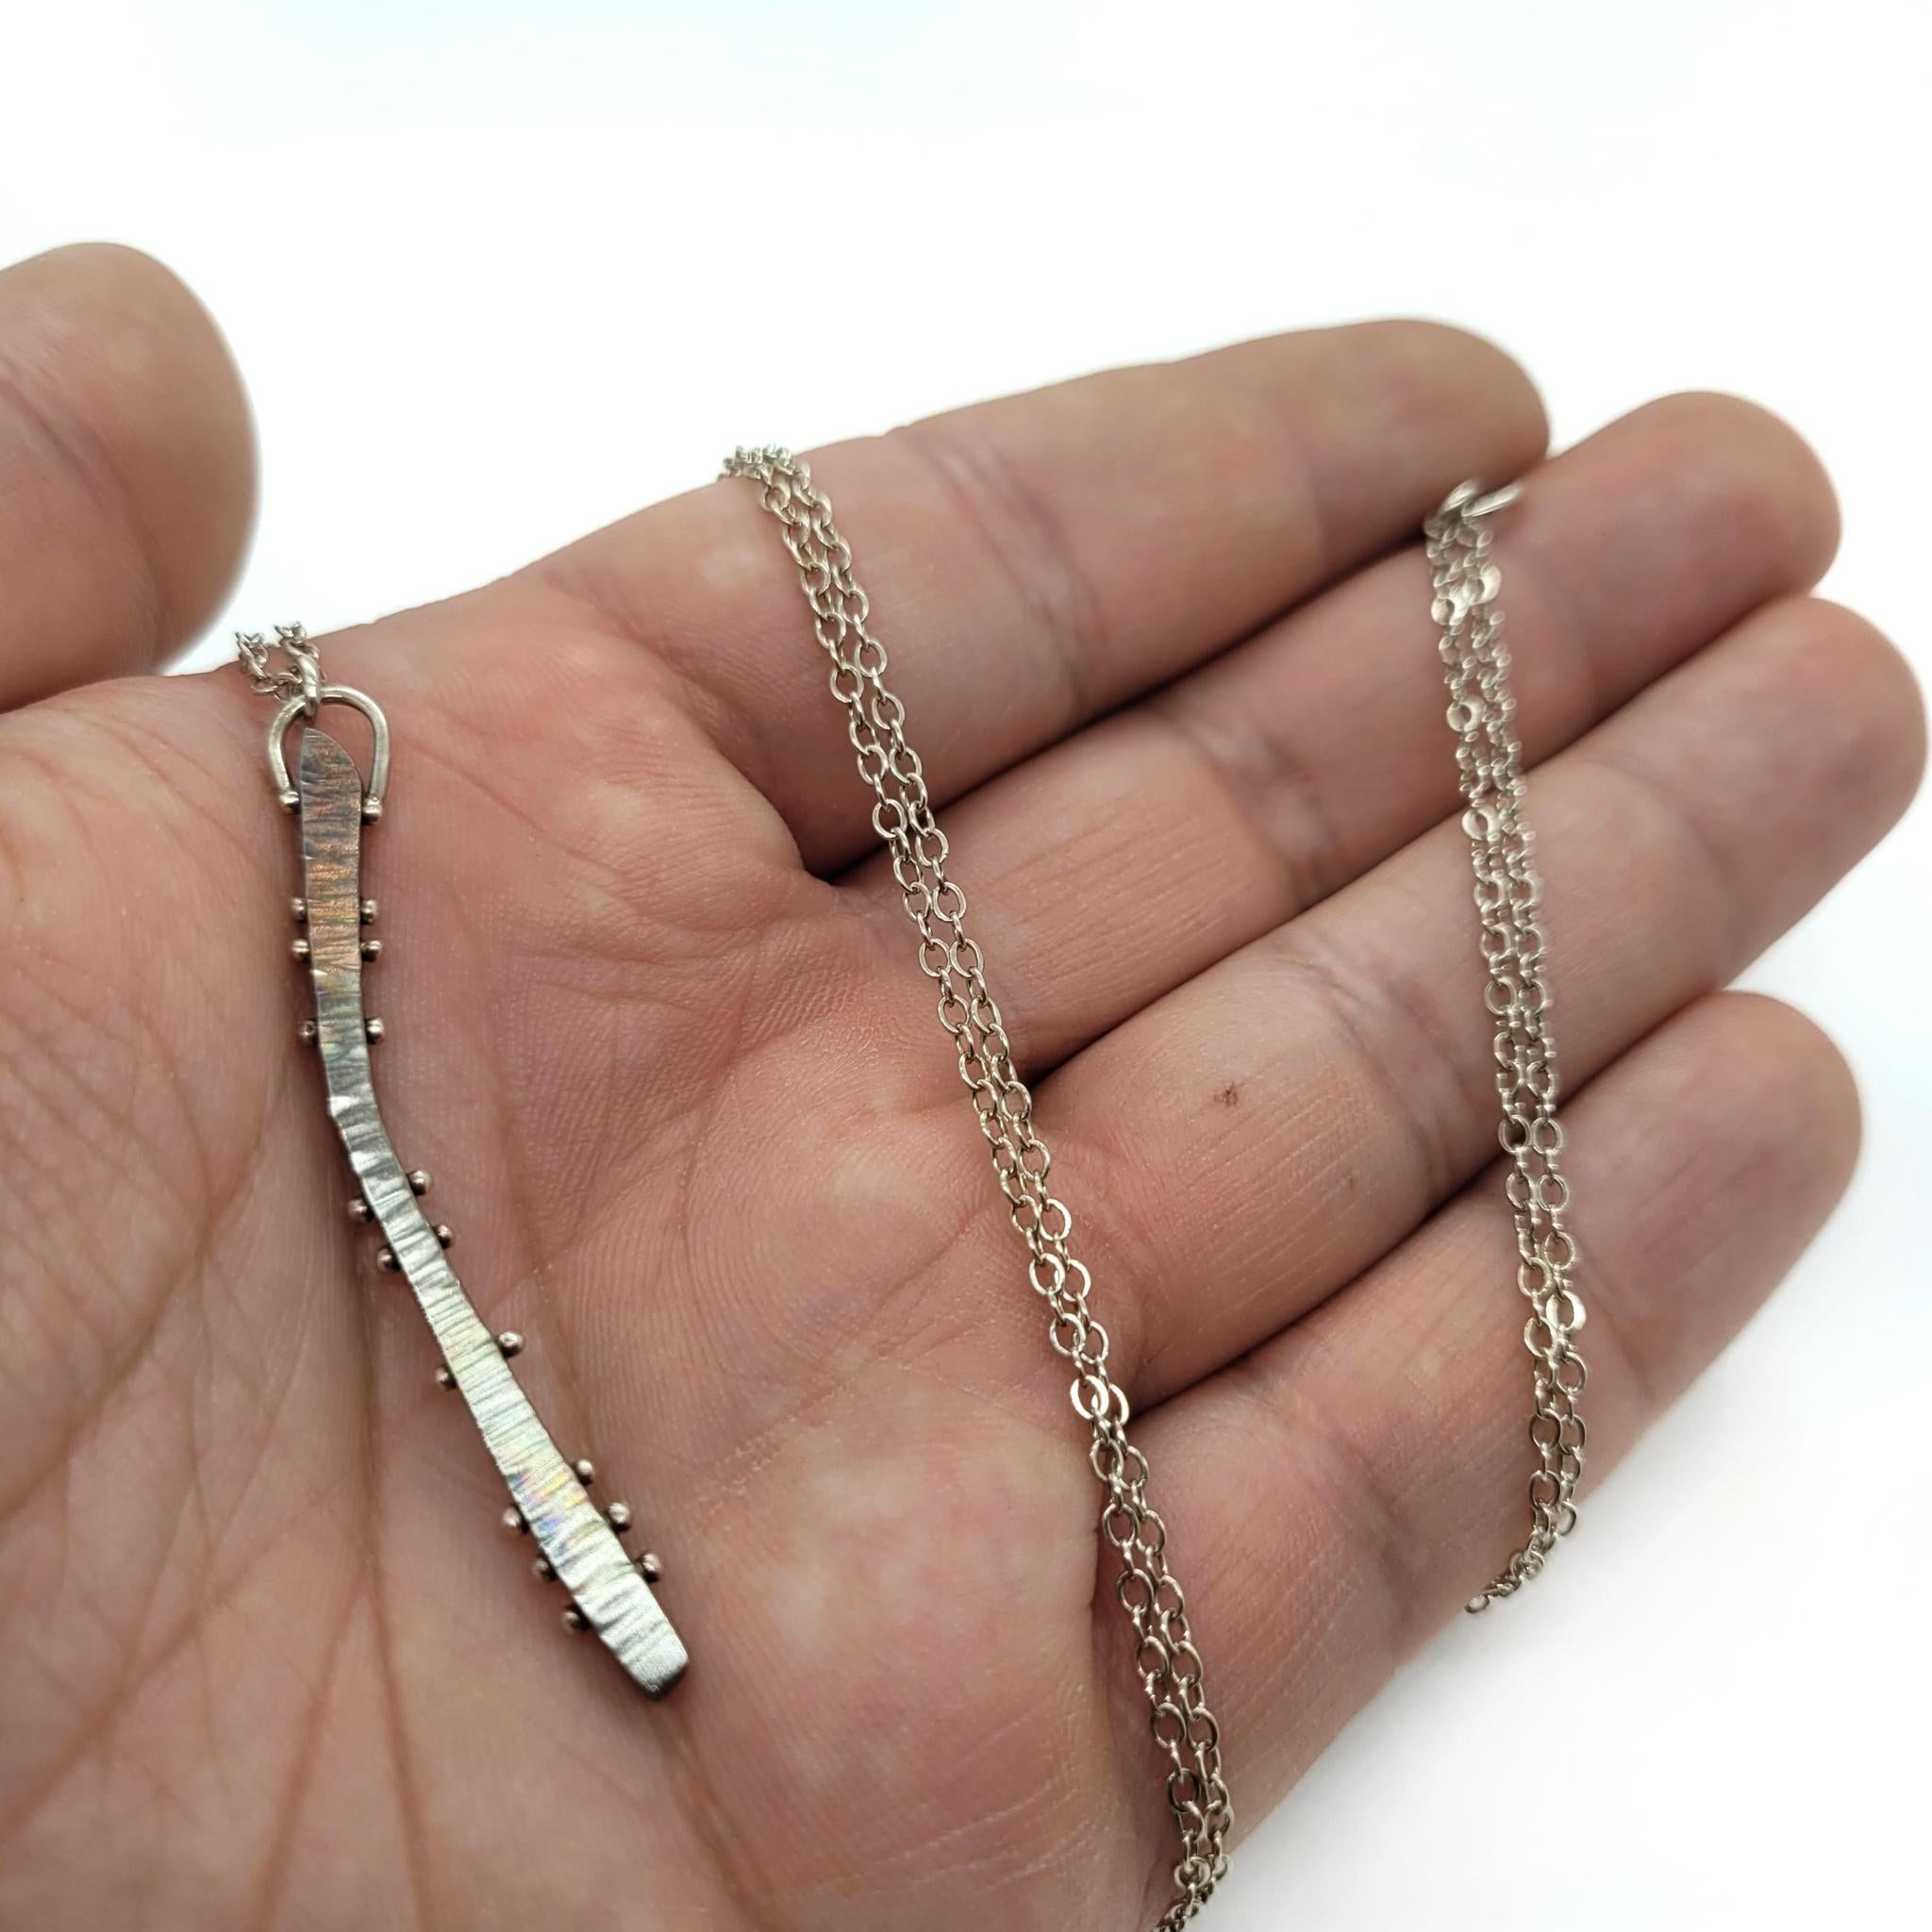 Jeweler's Saw Pin or Pendant - taviametal